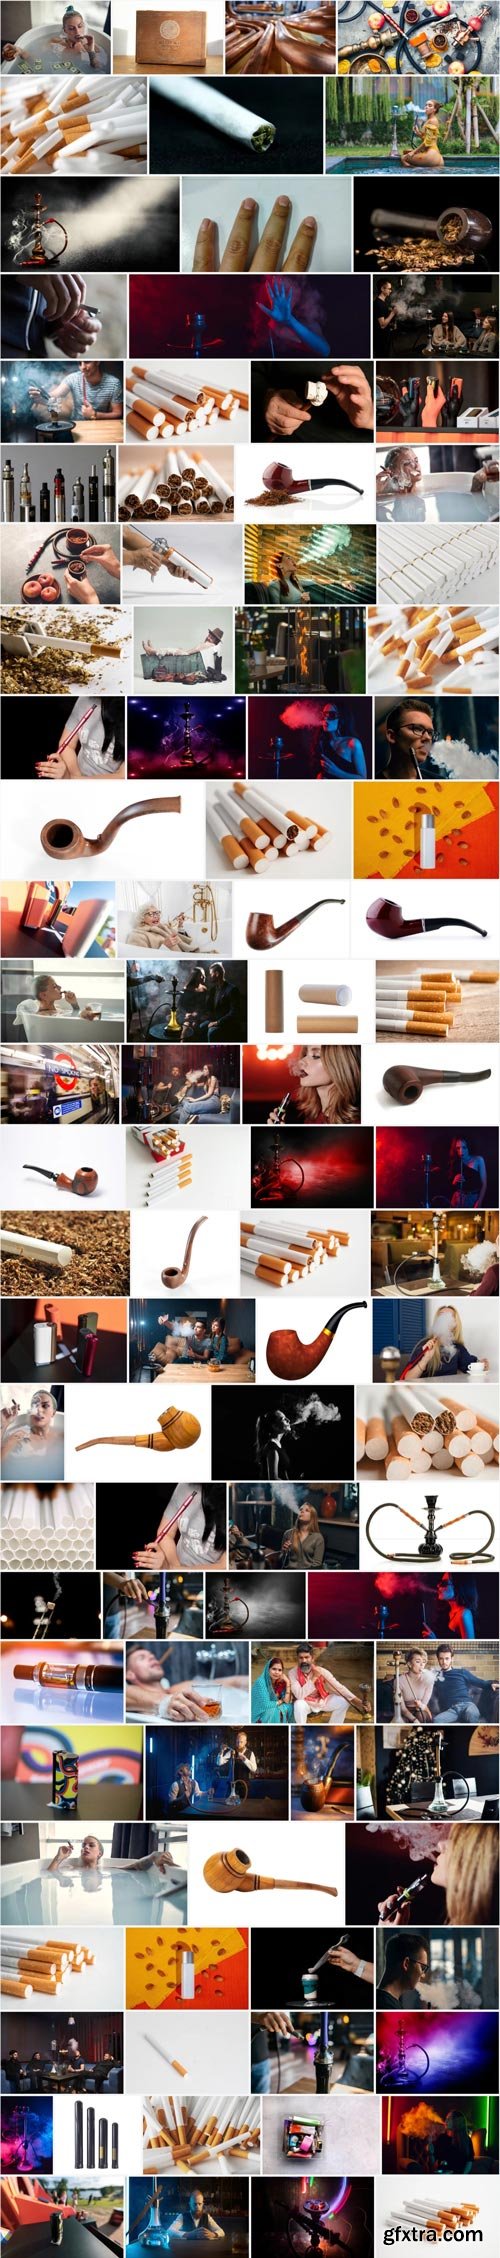 Amazing Photos, Cigars and Tube for Smoking 100xJPEG